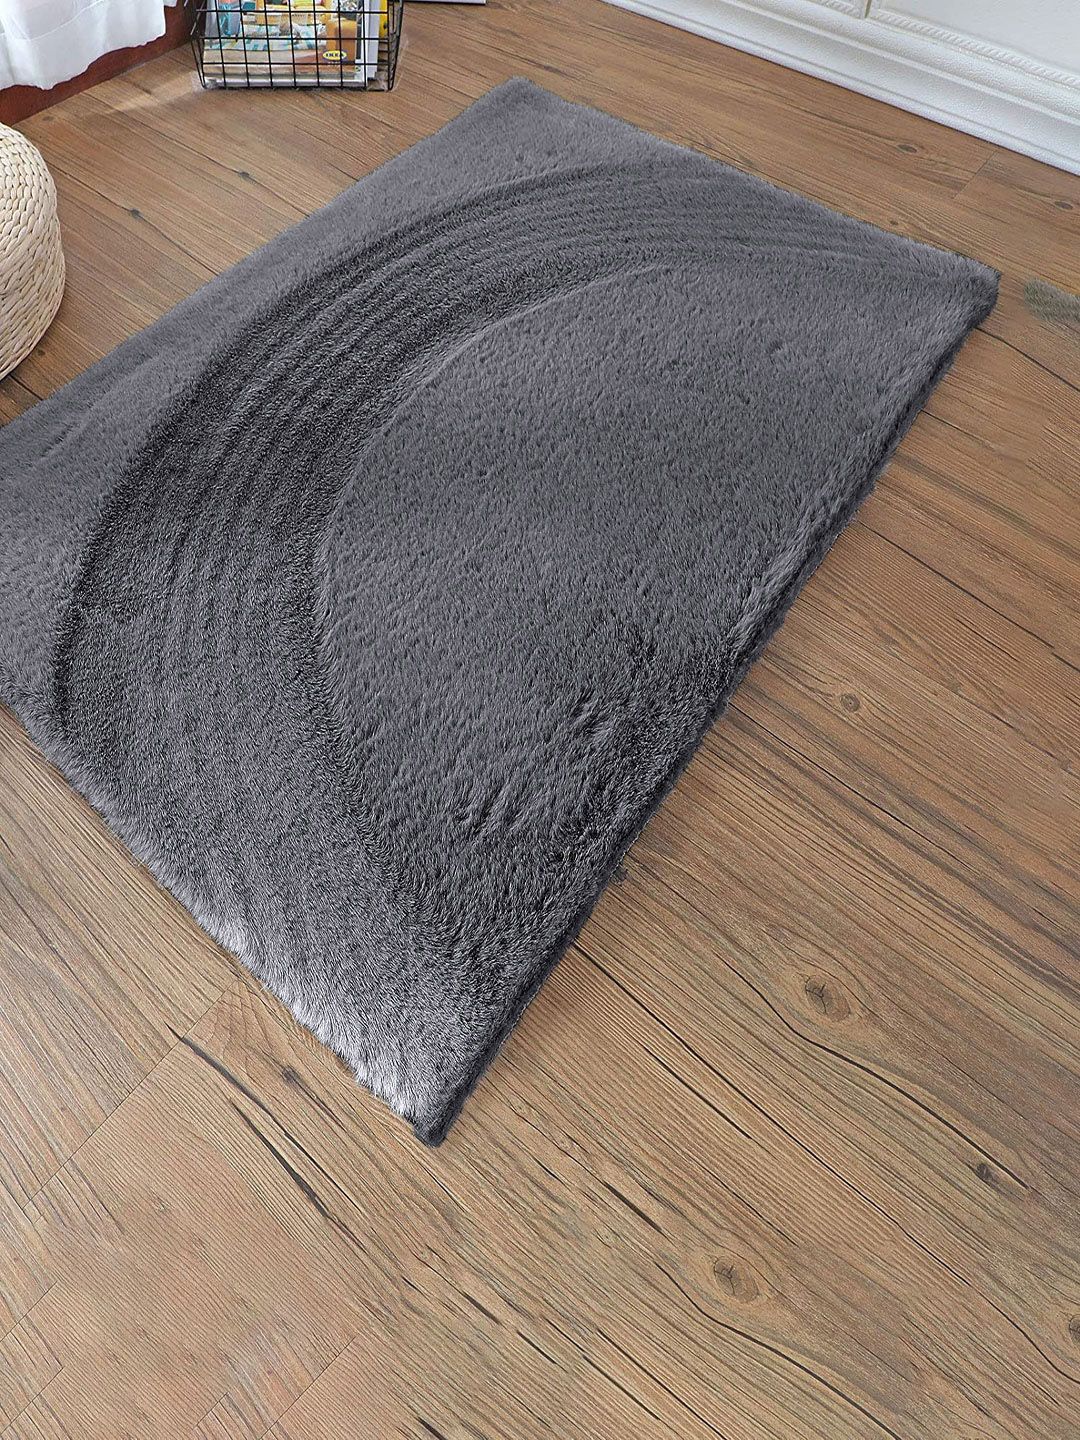 LUXEHOME INTERNATIONAL Grey Anti-Skid Rectangular Ultra Soft Ruffle Doormat Price in India